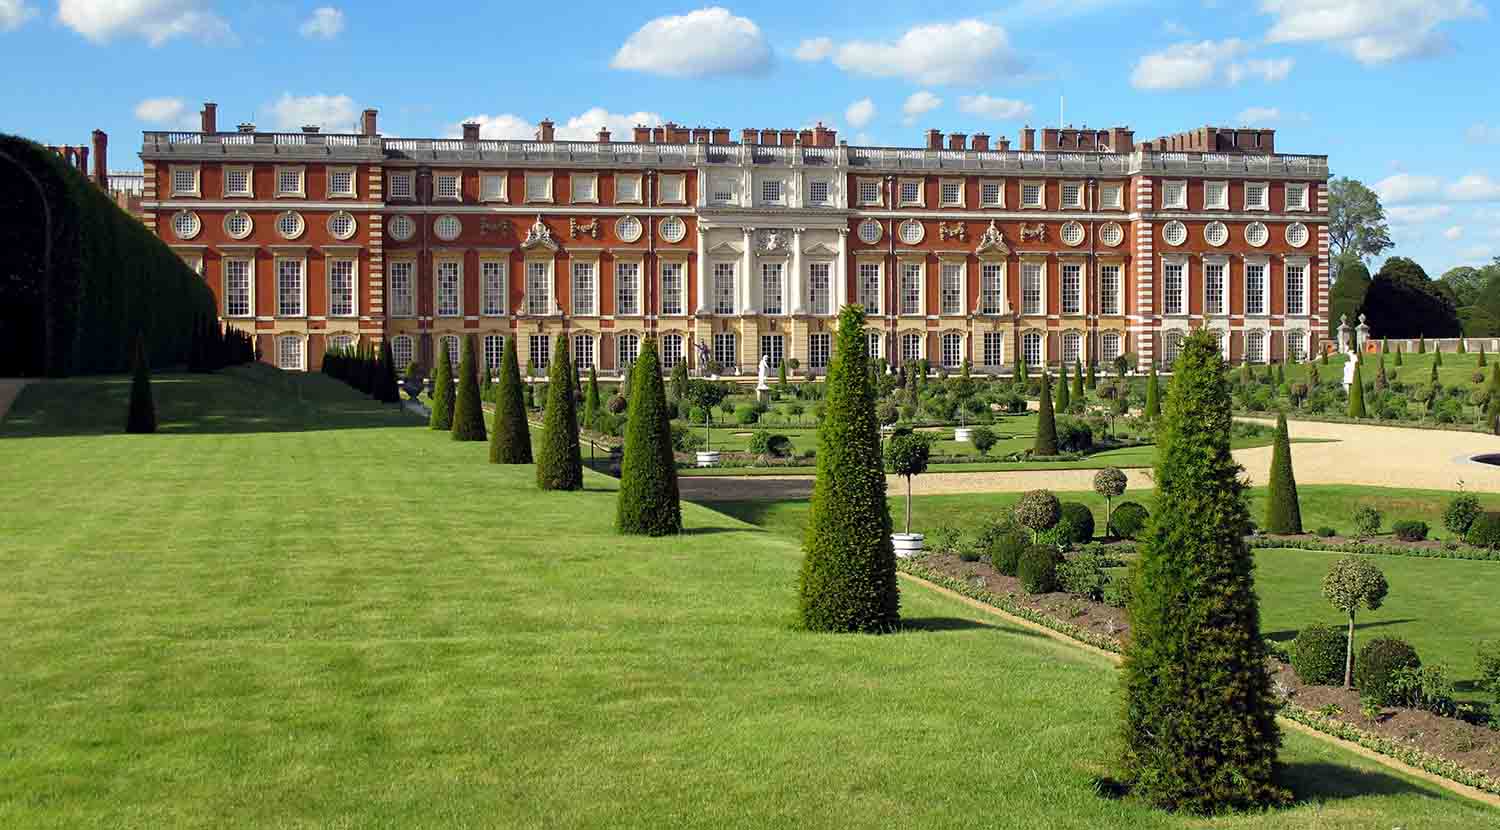 Лондон местонахождение королевской резиденции. Хэмптон-корт дворец. Королевская резиденция Хэмптон. Хэмптон-корт фасады. Королевский теннисный корт Хэмптон корт.